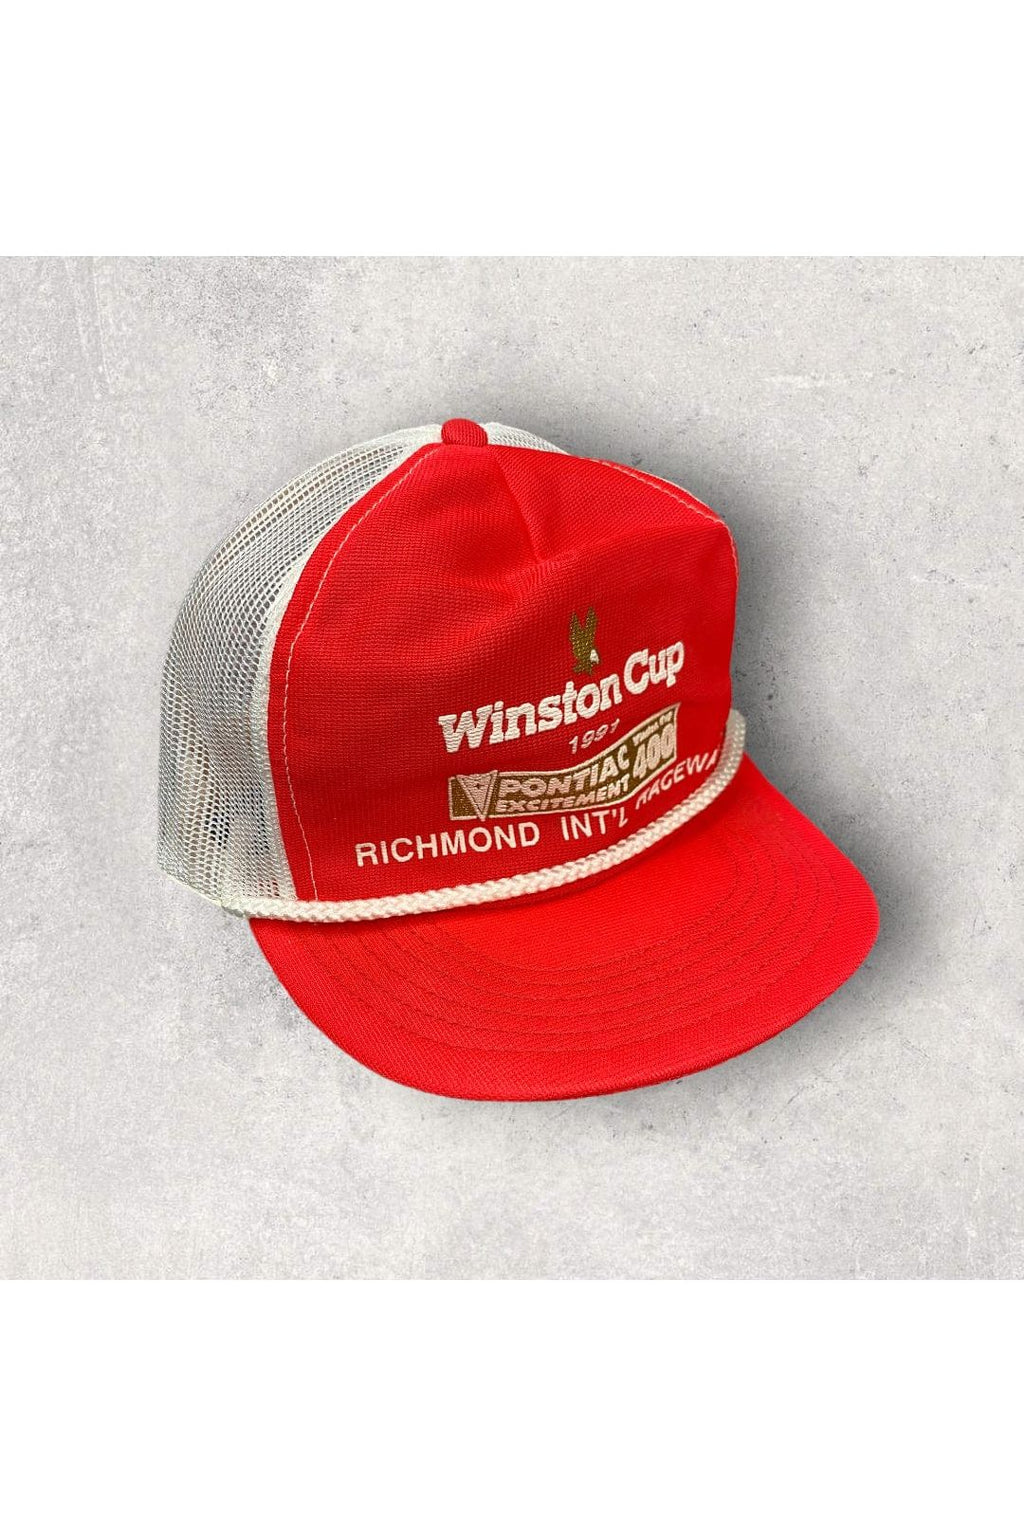 Vintage 1991 Winston Cup Snapback Trucker Hat